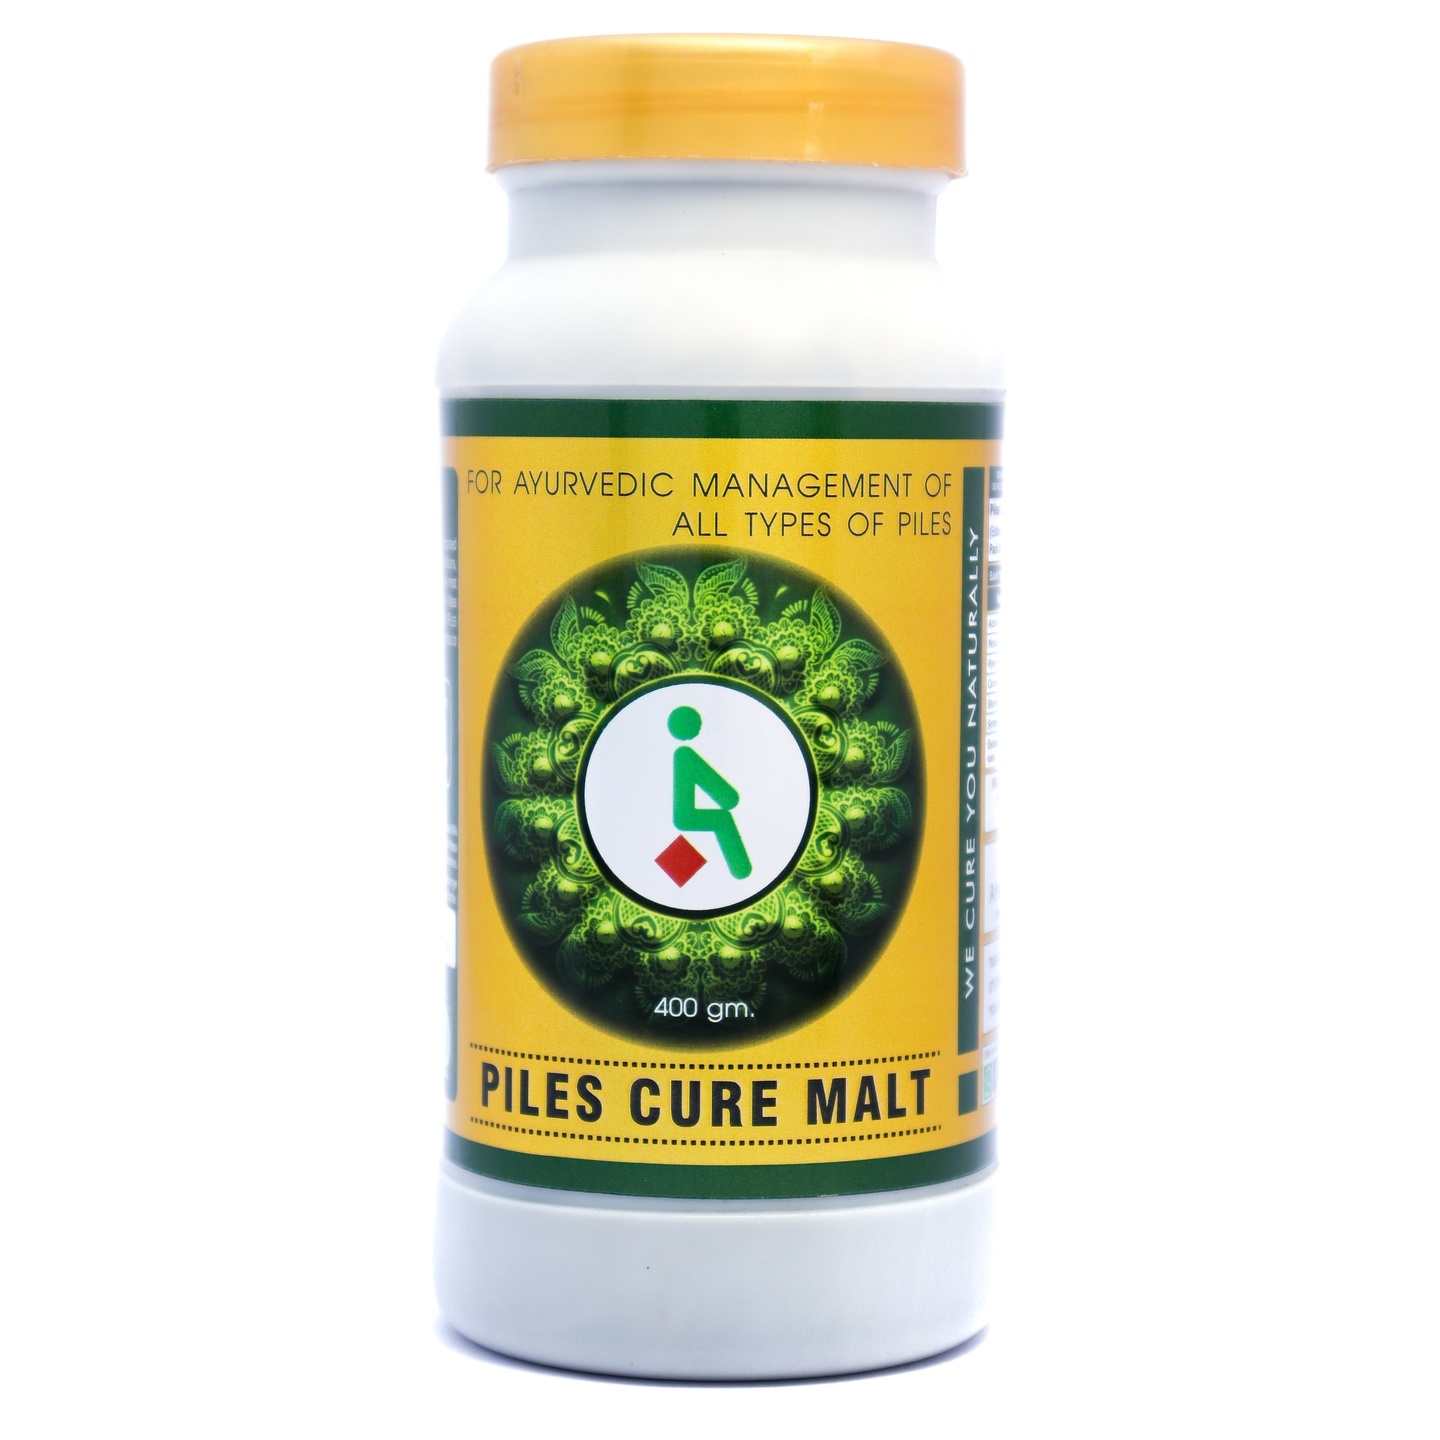 Piles Cure Malt